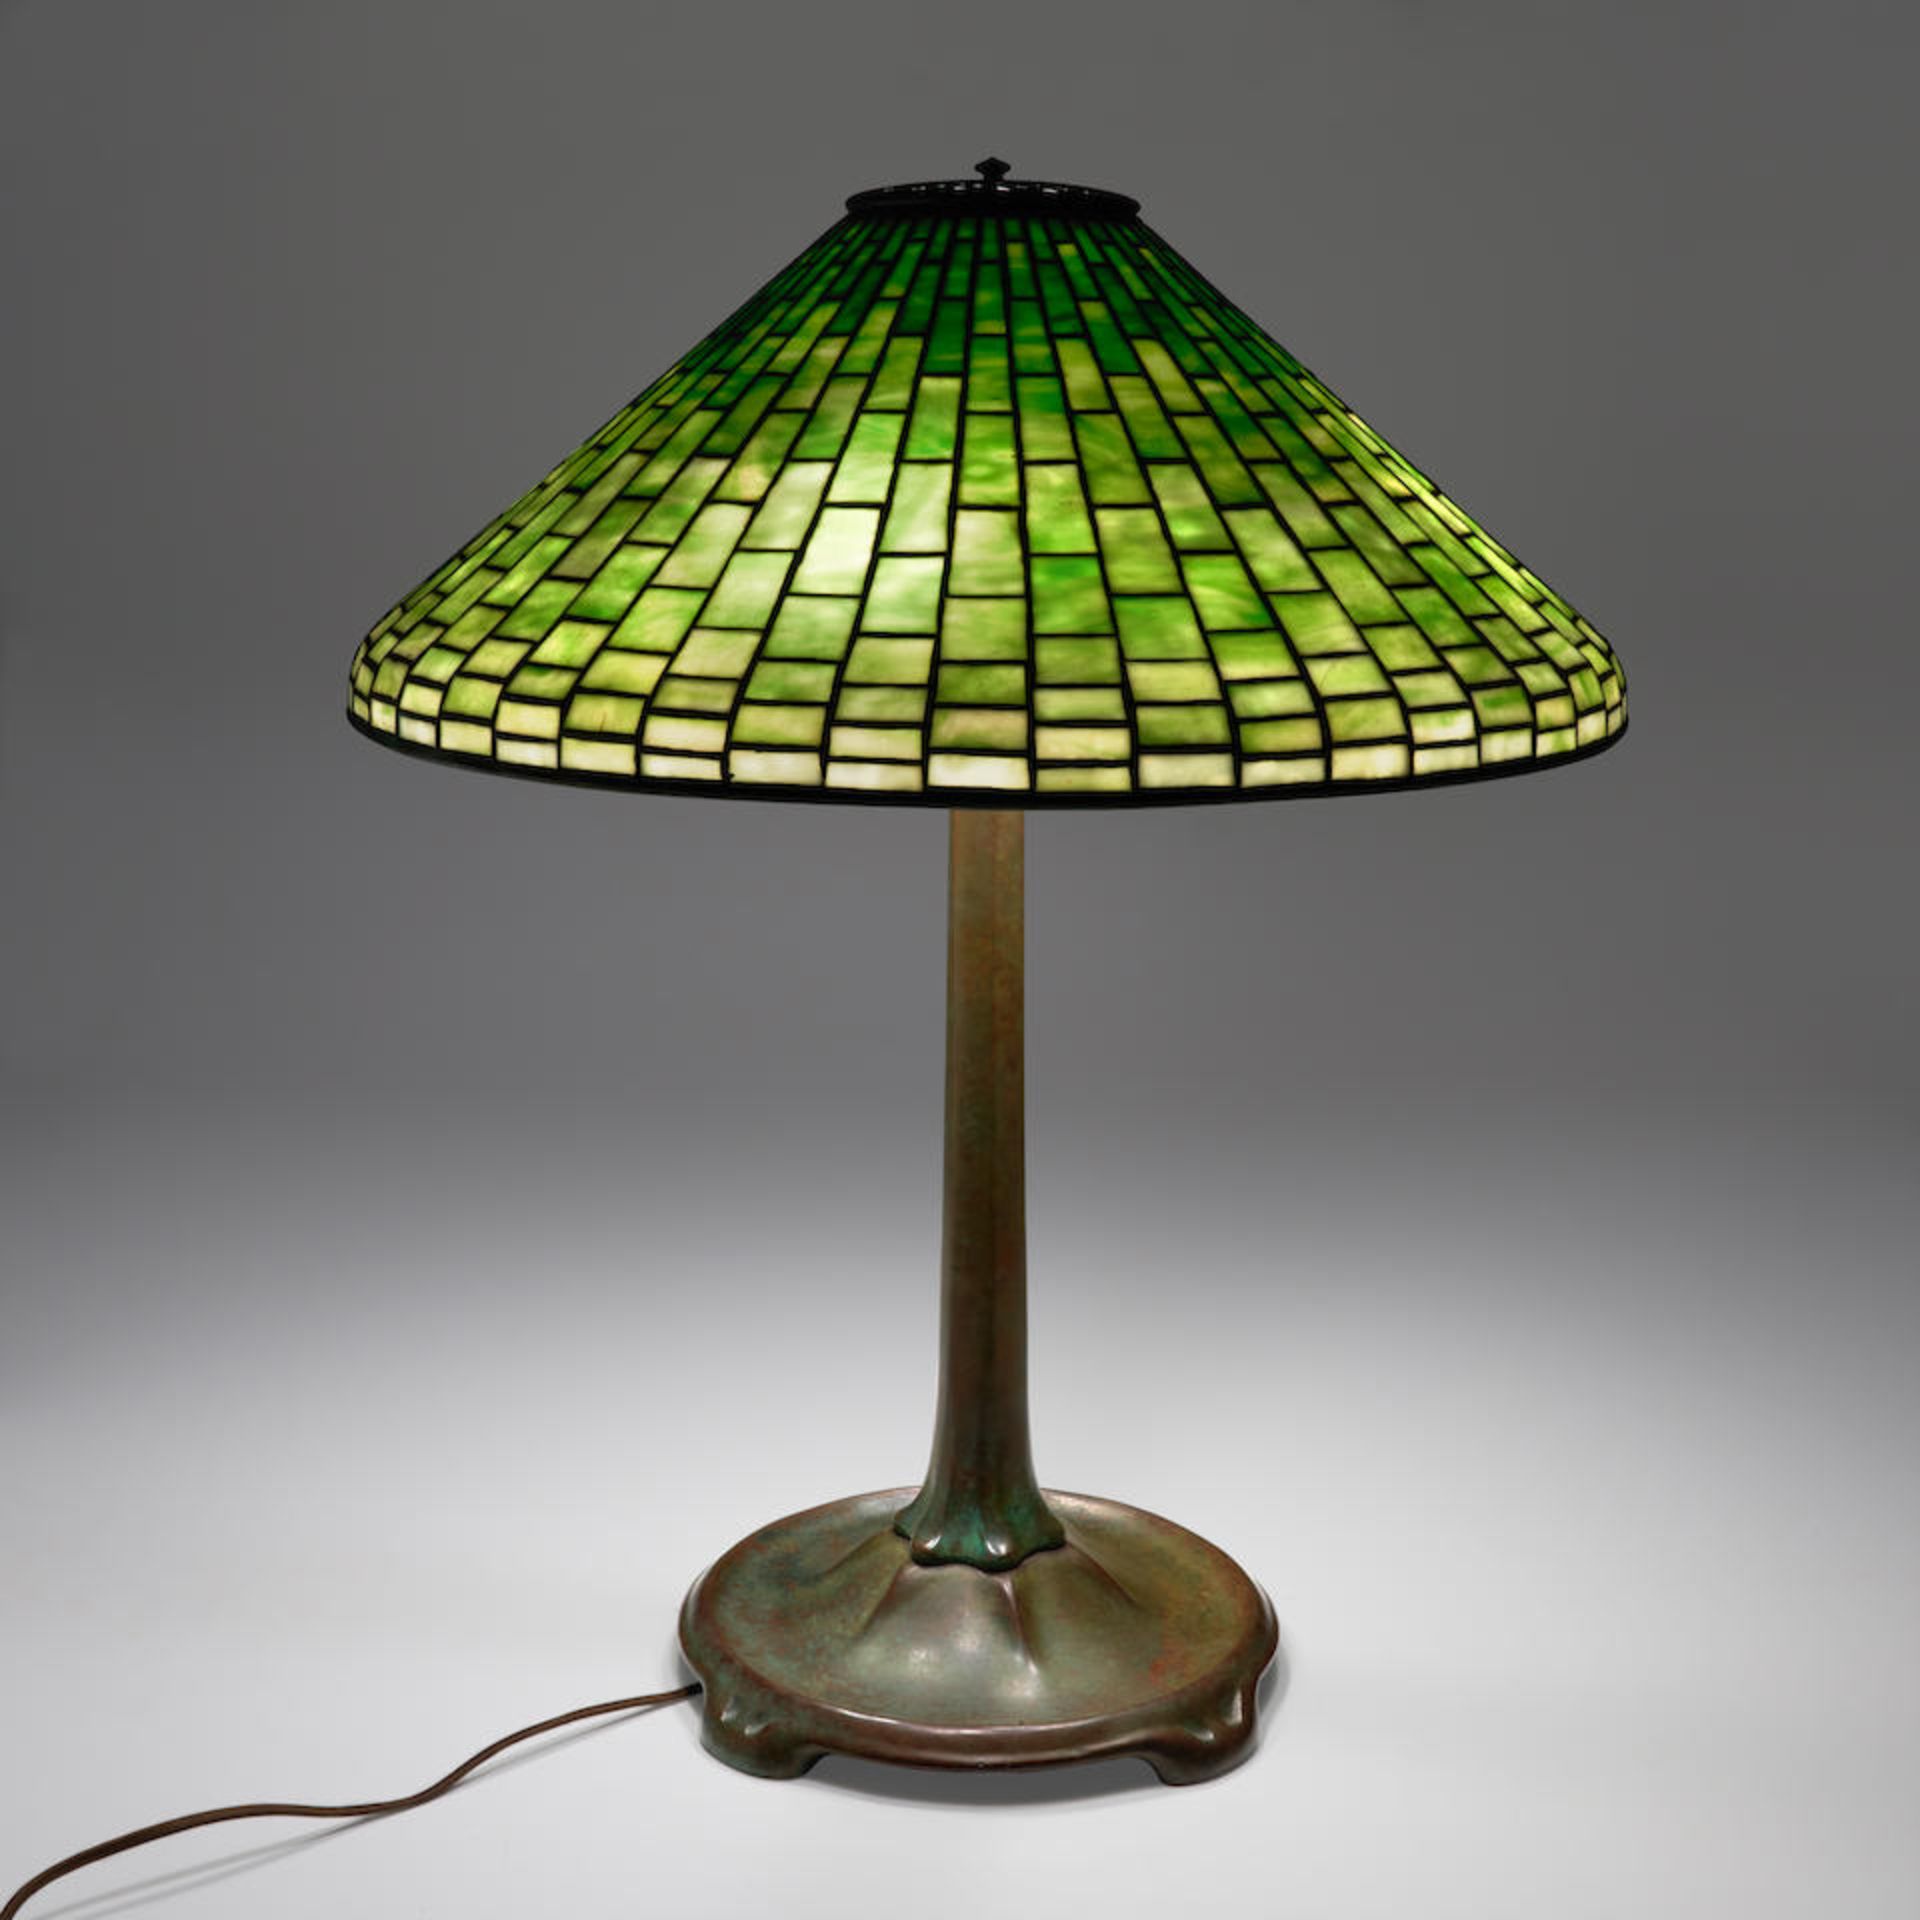 Tiffany Studios 'Geometric' Table Lamp, New York, New York, c. 1910, leaded shade, stamped mark ...